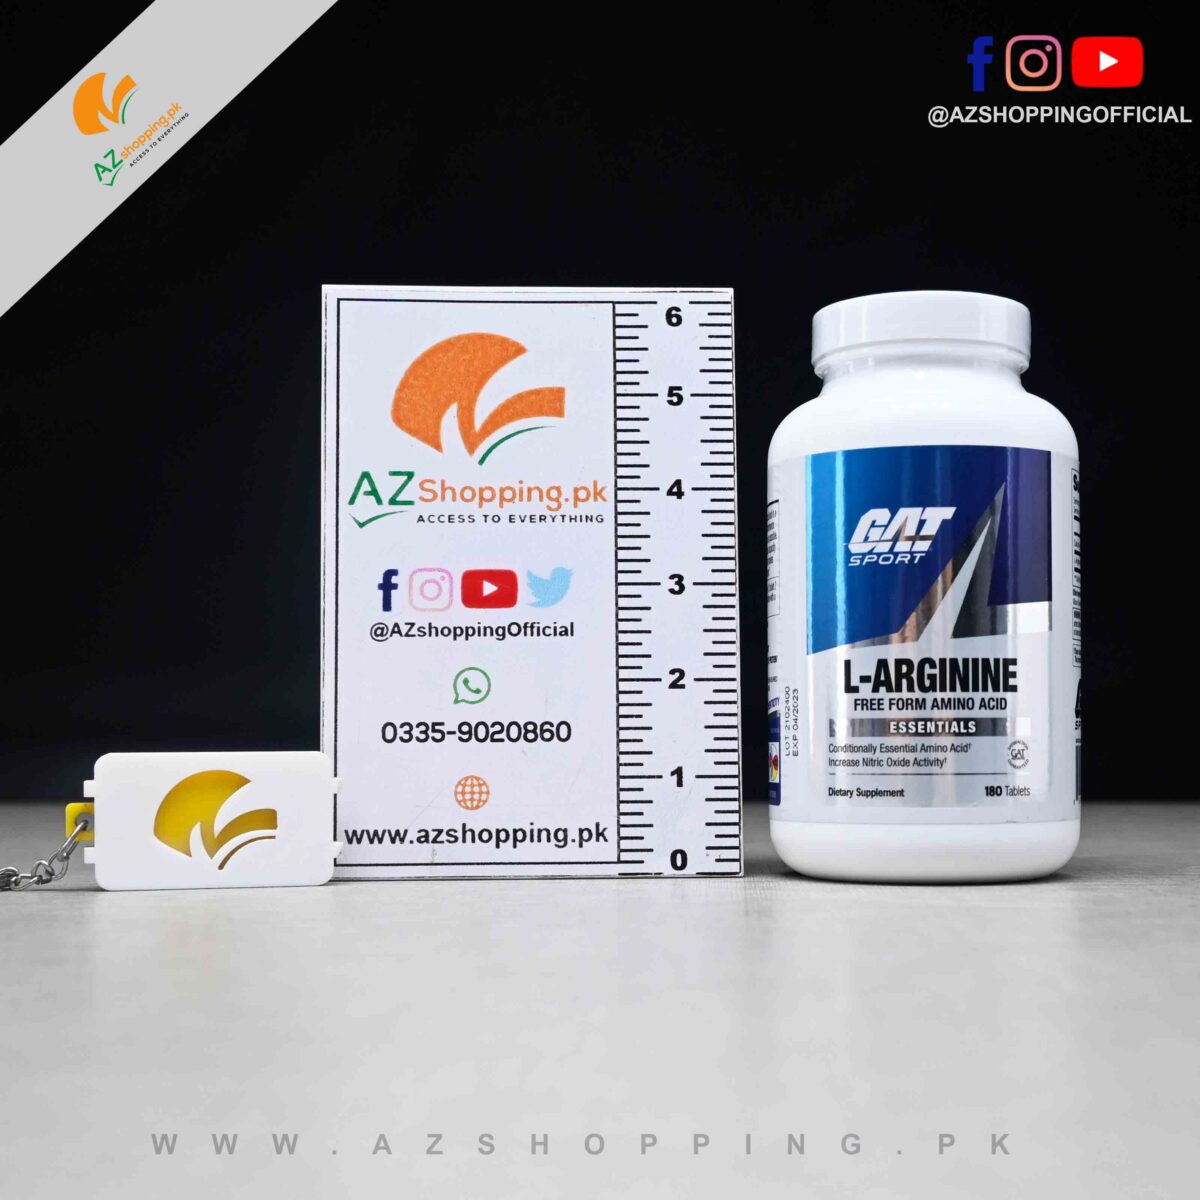 GAT Sport – L-Arginine Free Form Amino Acid – Essentials – 180 Tablets